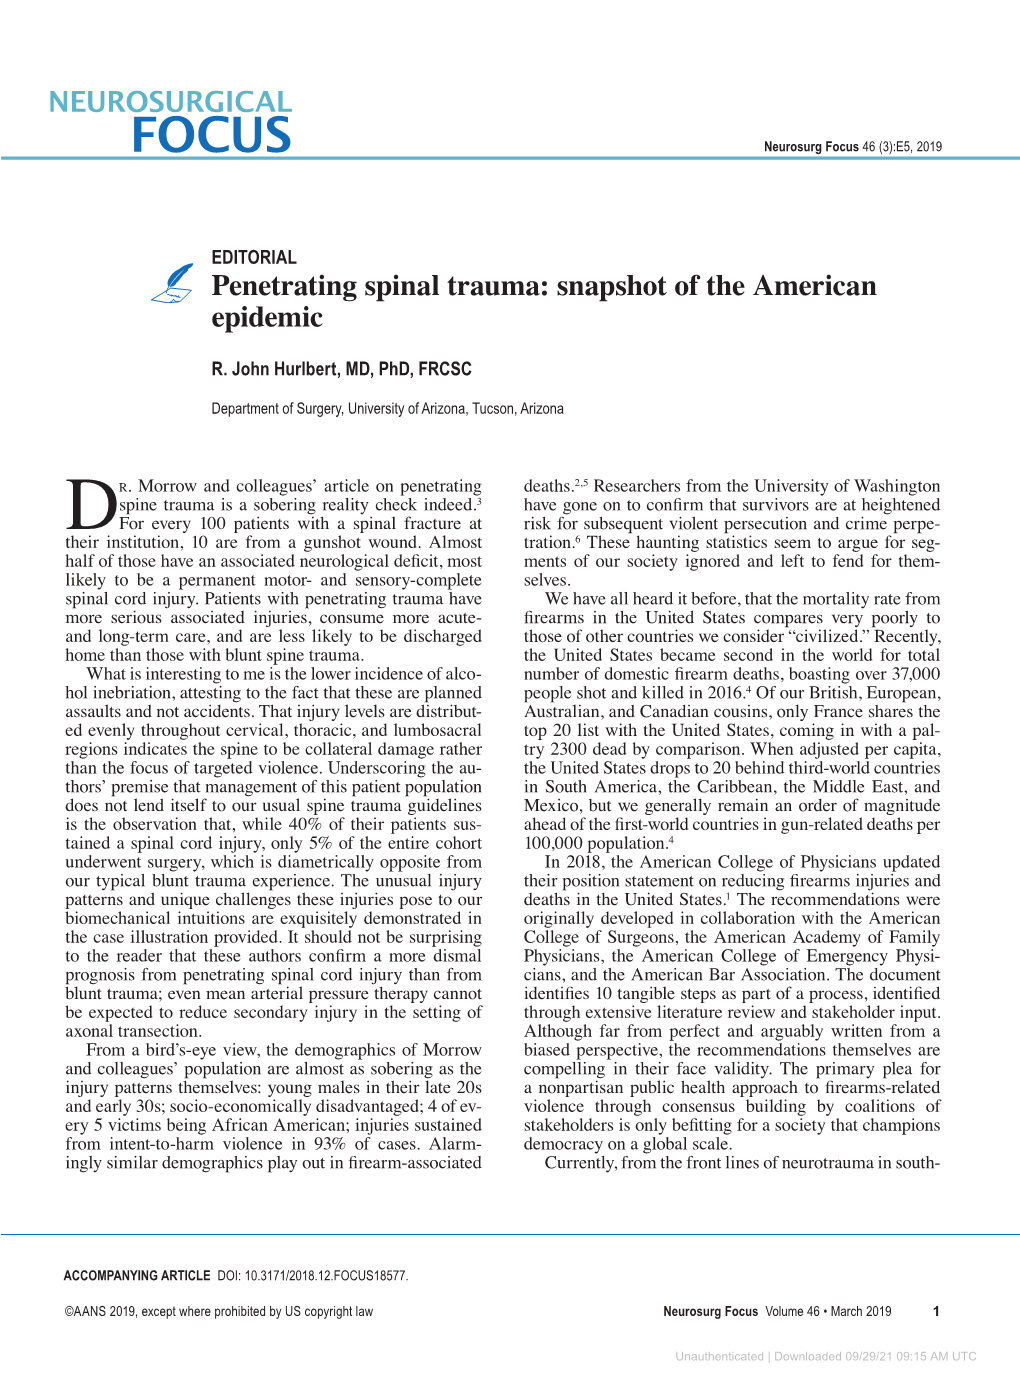 Penetrating Spinal Trauma: Snapshot of the American Epidemic